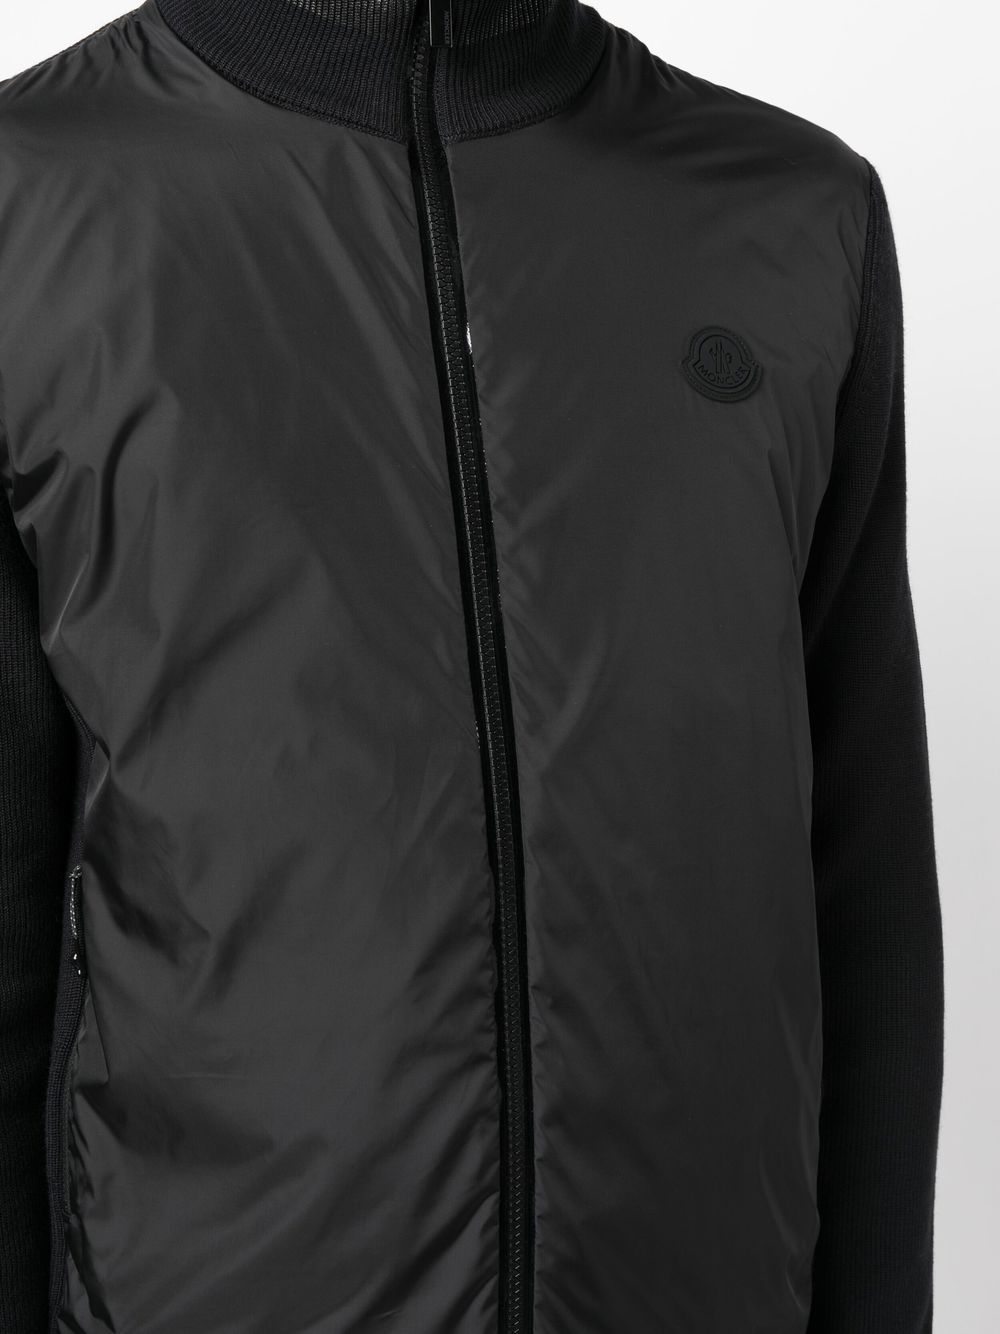 Moncler Grenoble Padded Knit Jacket 'Black' - 9B00003M1122999